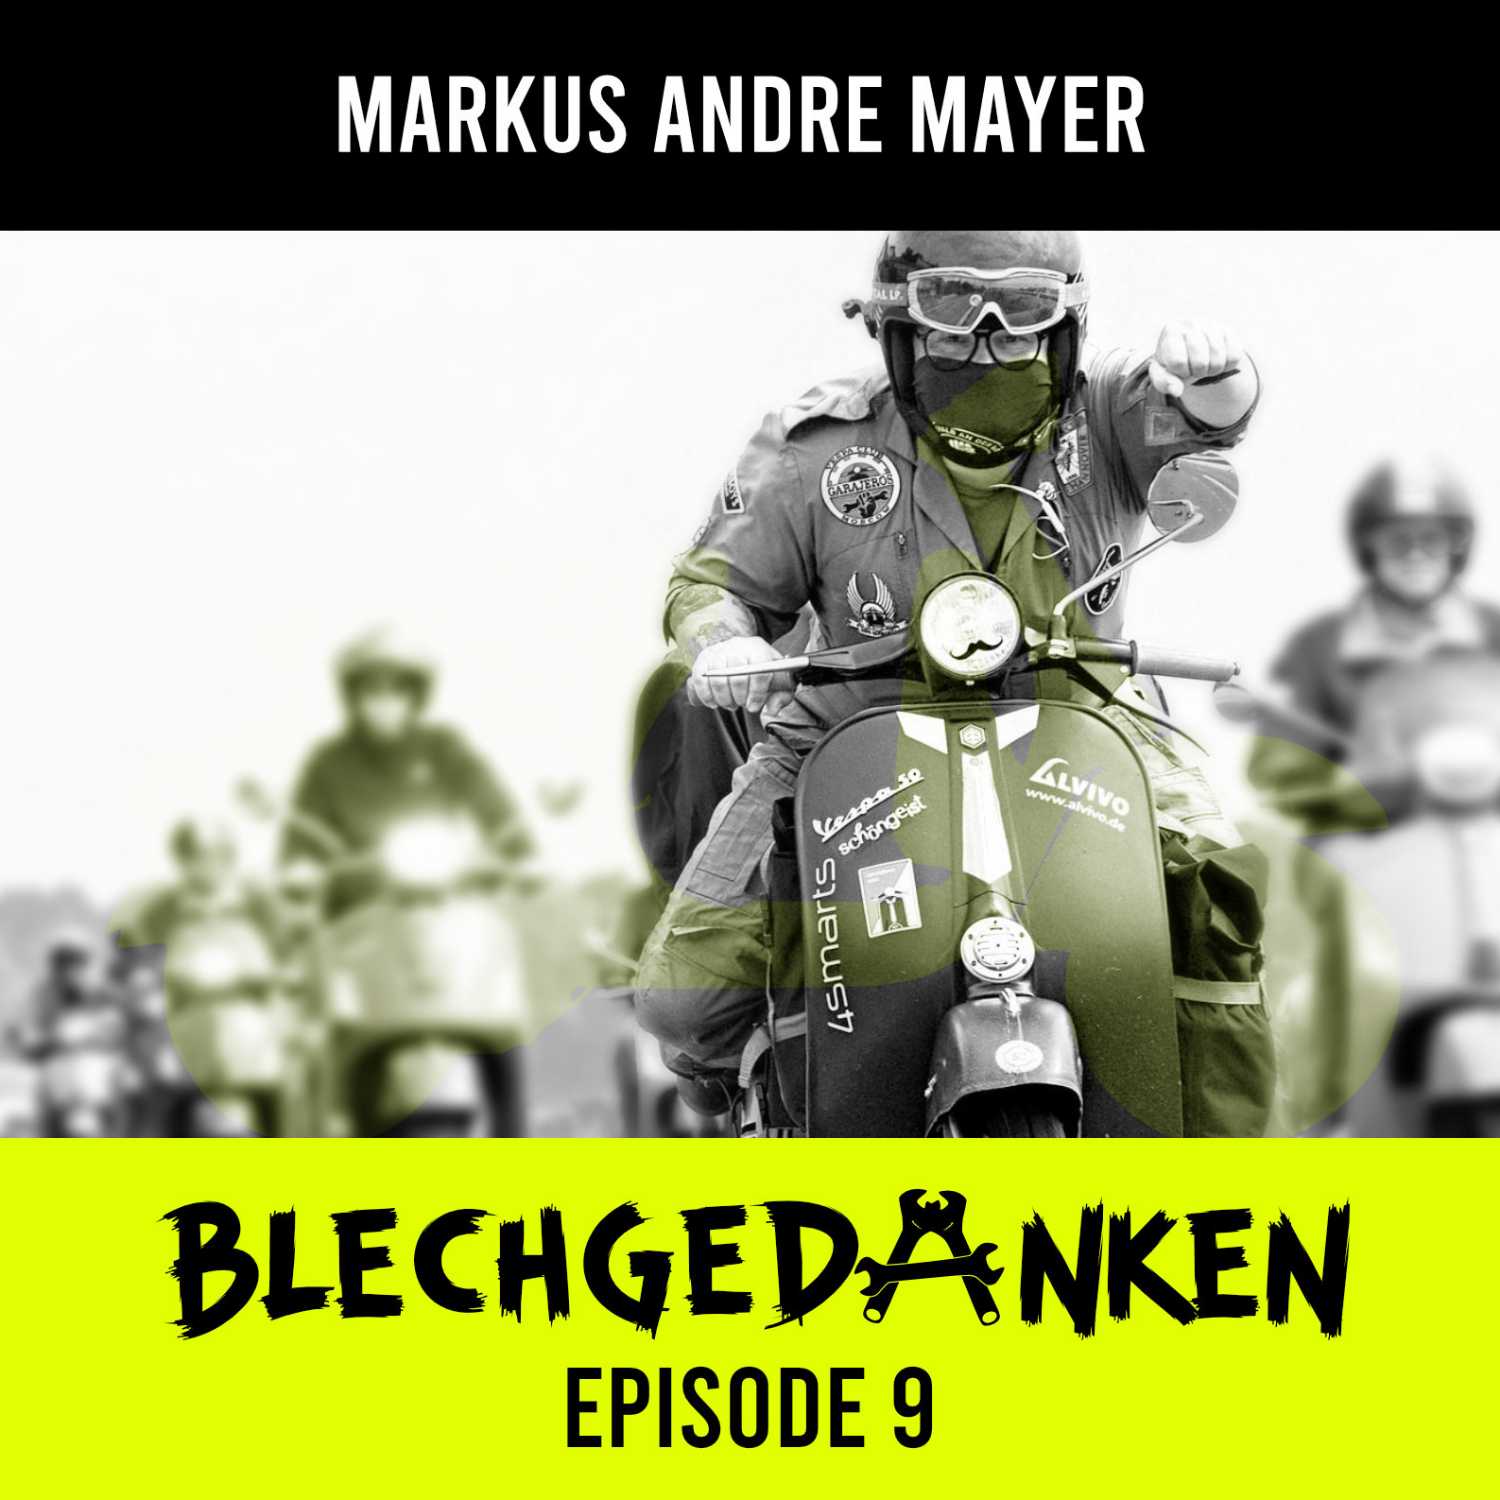 Blechgedanken Episode 9 – Markus Andre Mayer – Extremvespatouren sind nichts fur Samtpöcker...